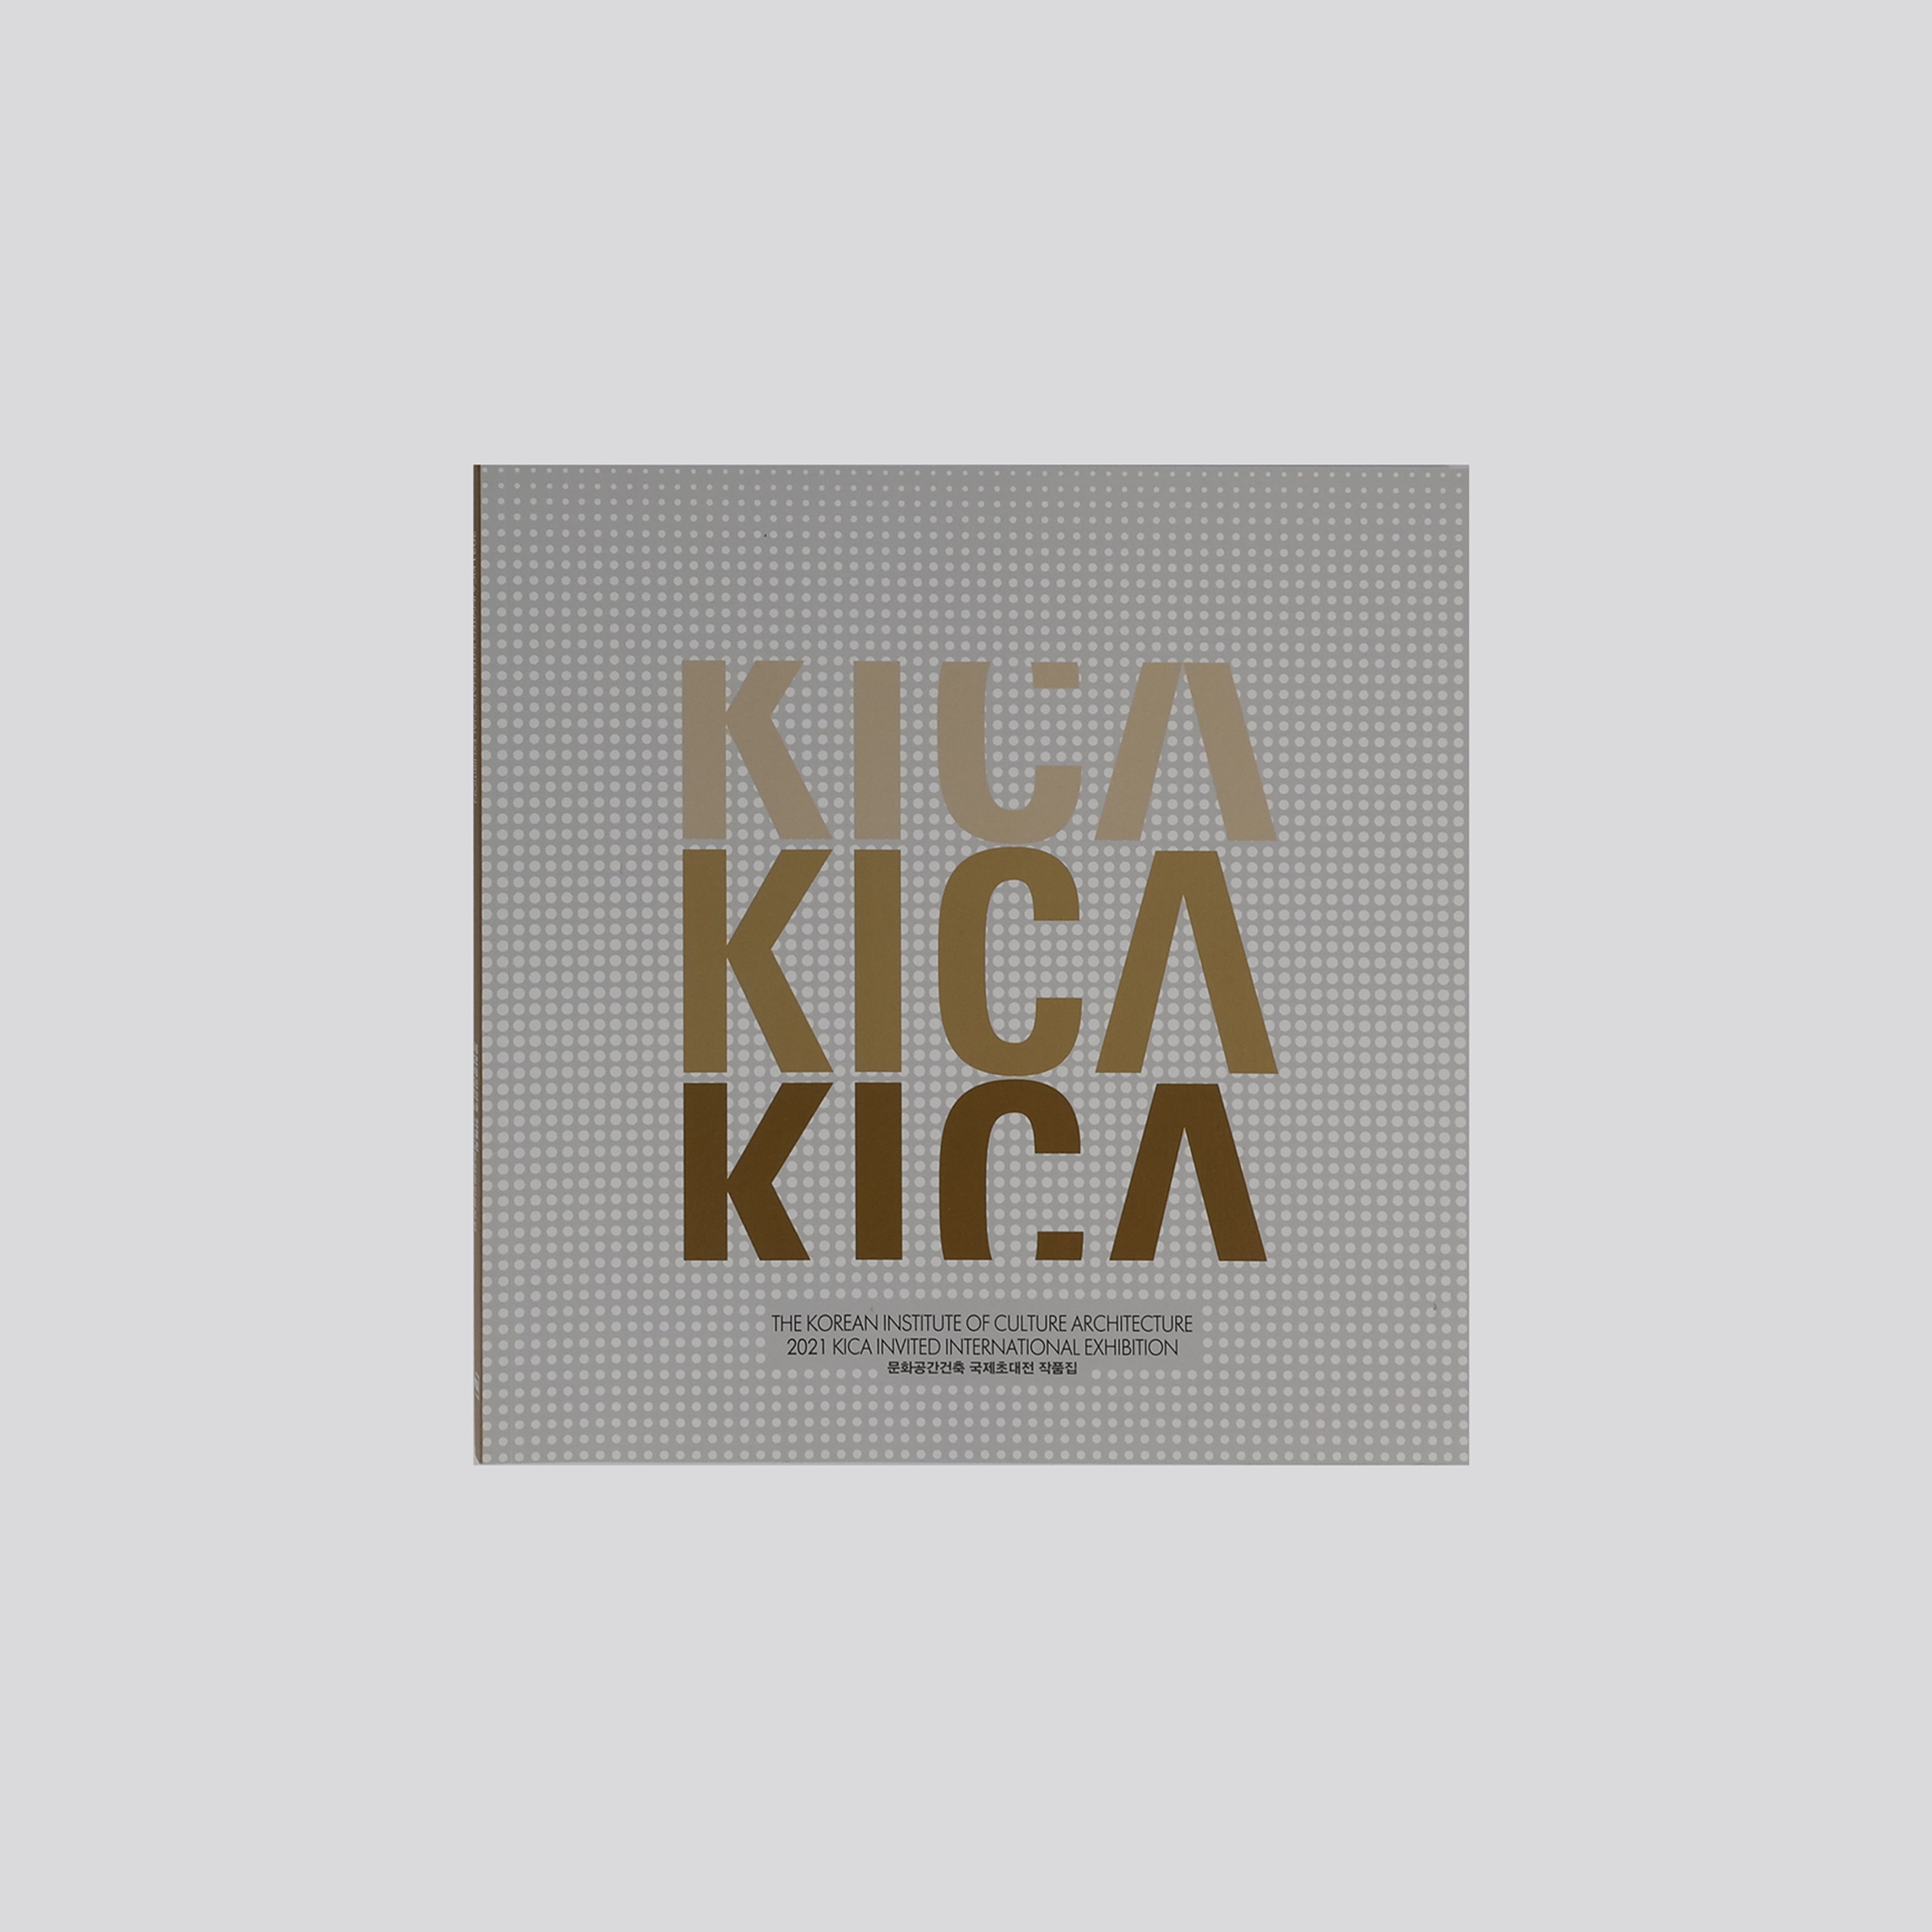 The Korean Institute of Culture Architecture 2021 KICA Invited International Exhibition